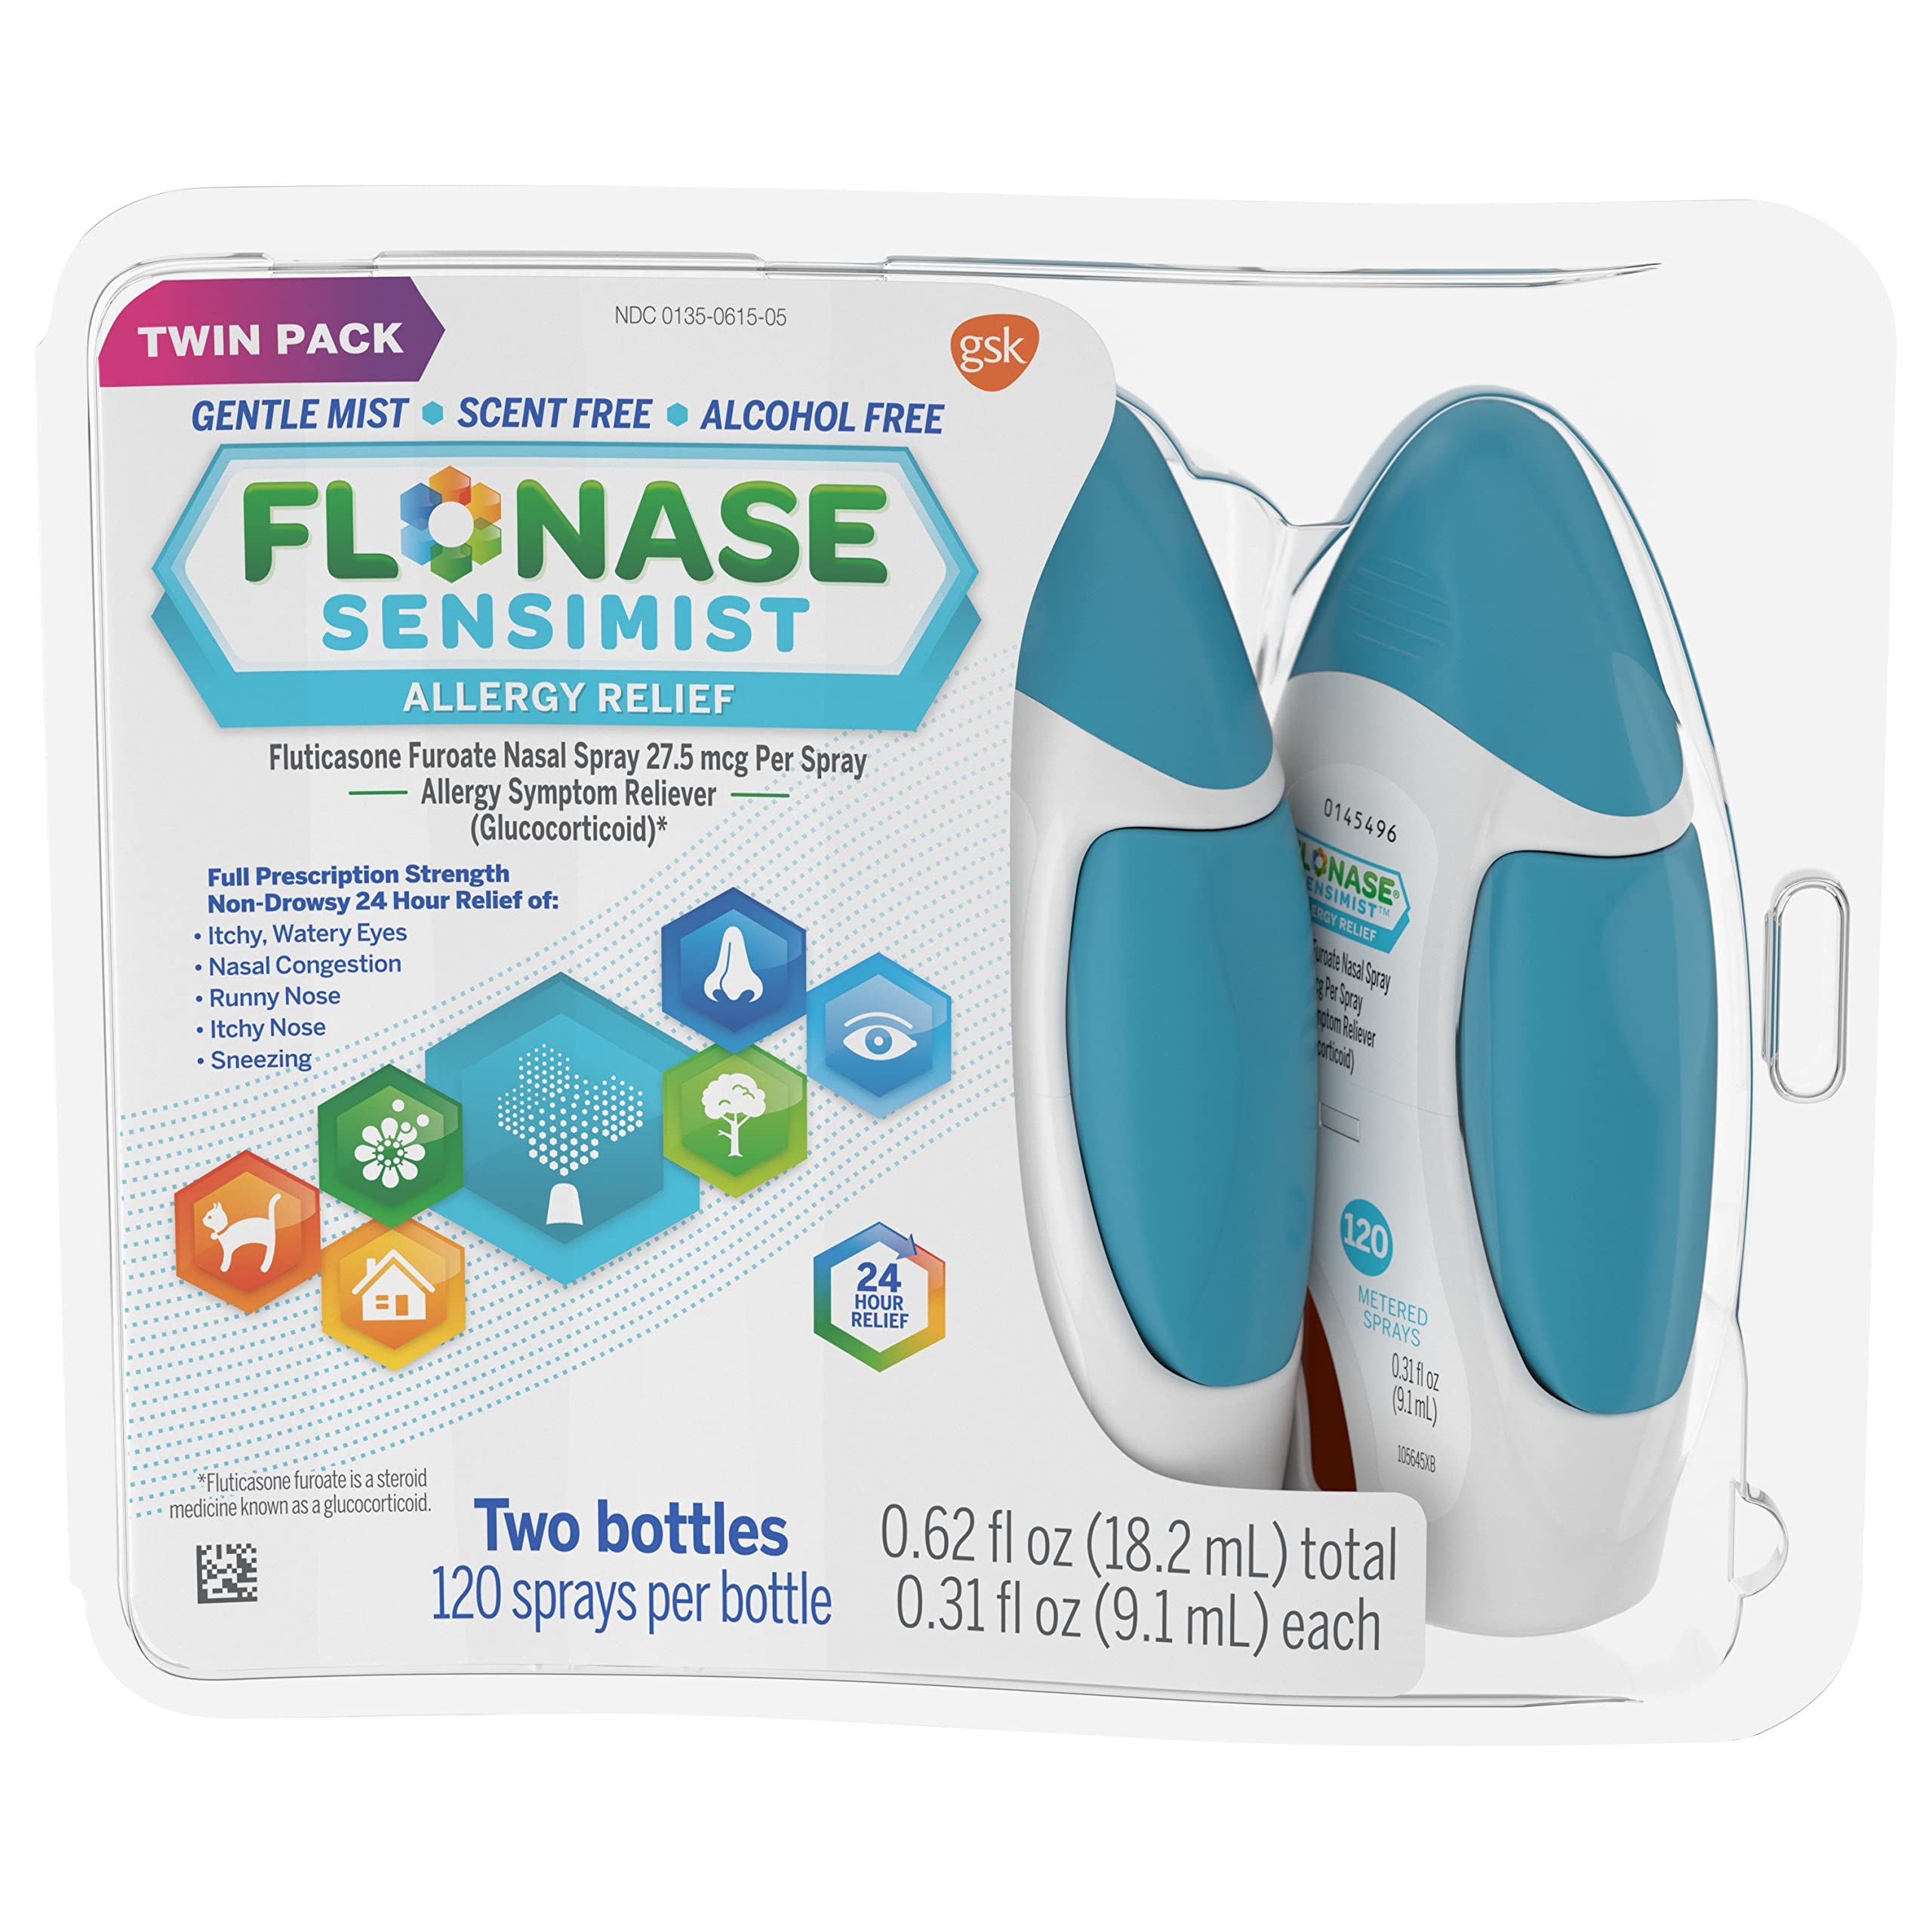 2-Pack 0.31-Oz Flonase Sensimist Allergy Relief Nasal Spray $12.60 w/ S&S + Free Shipping